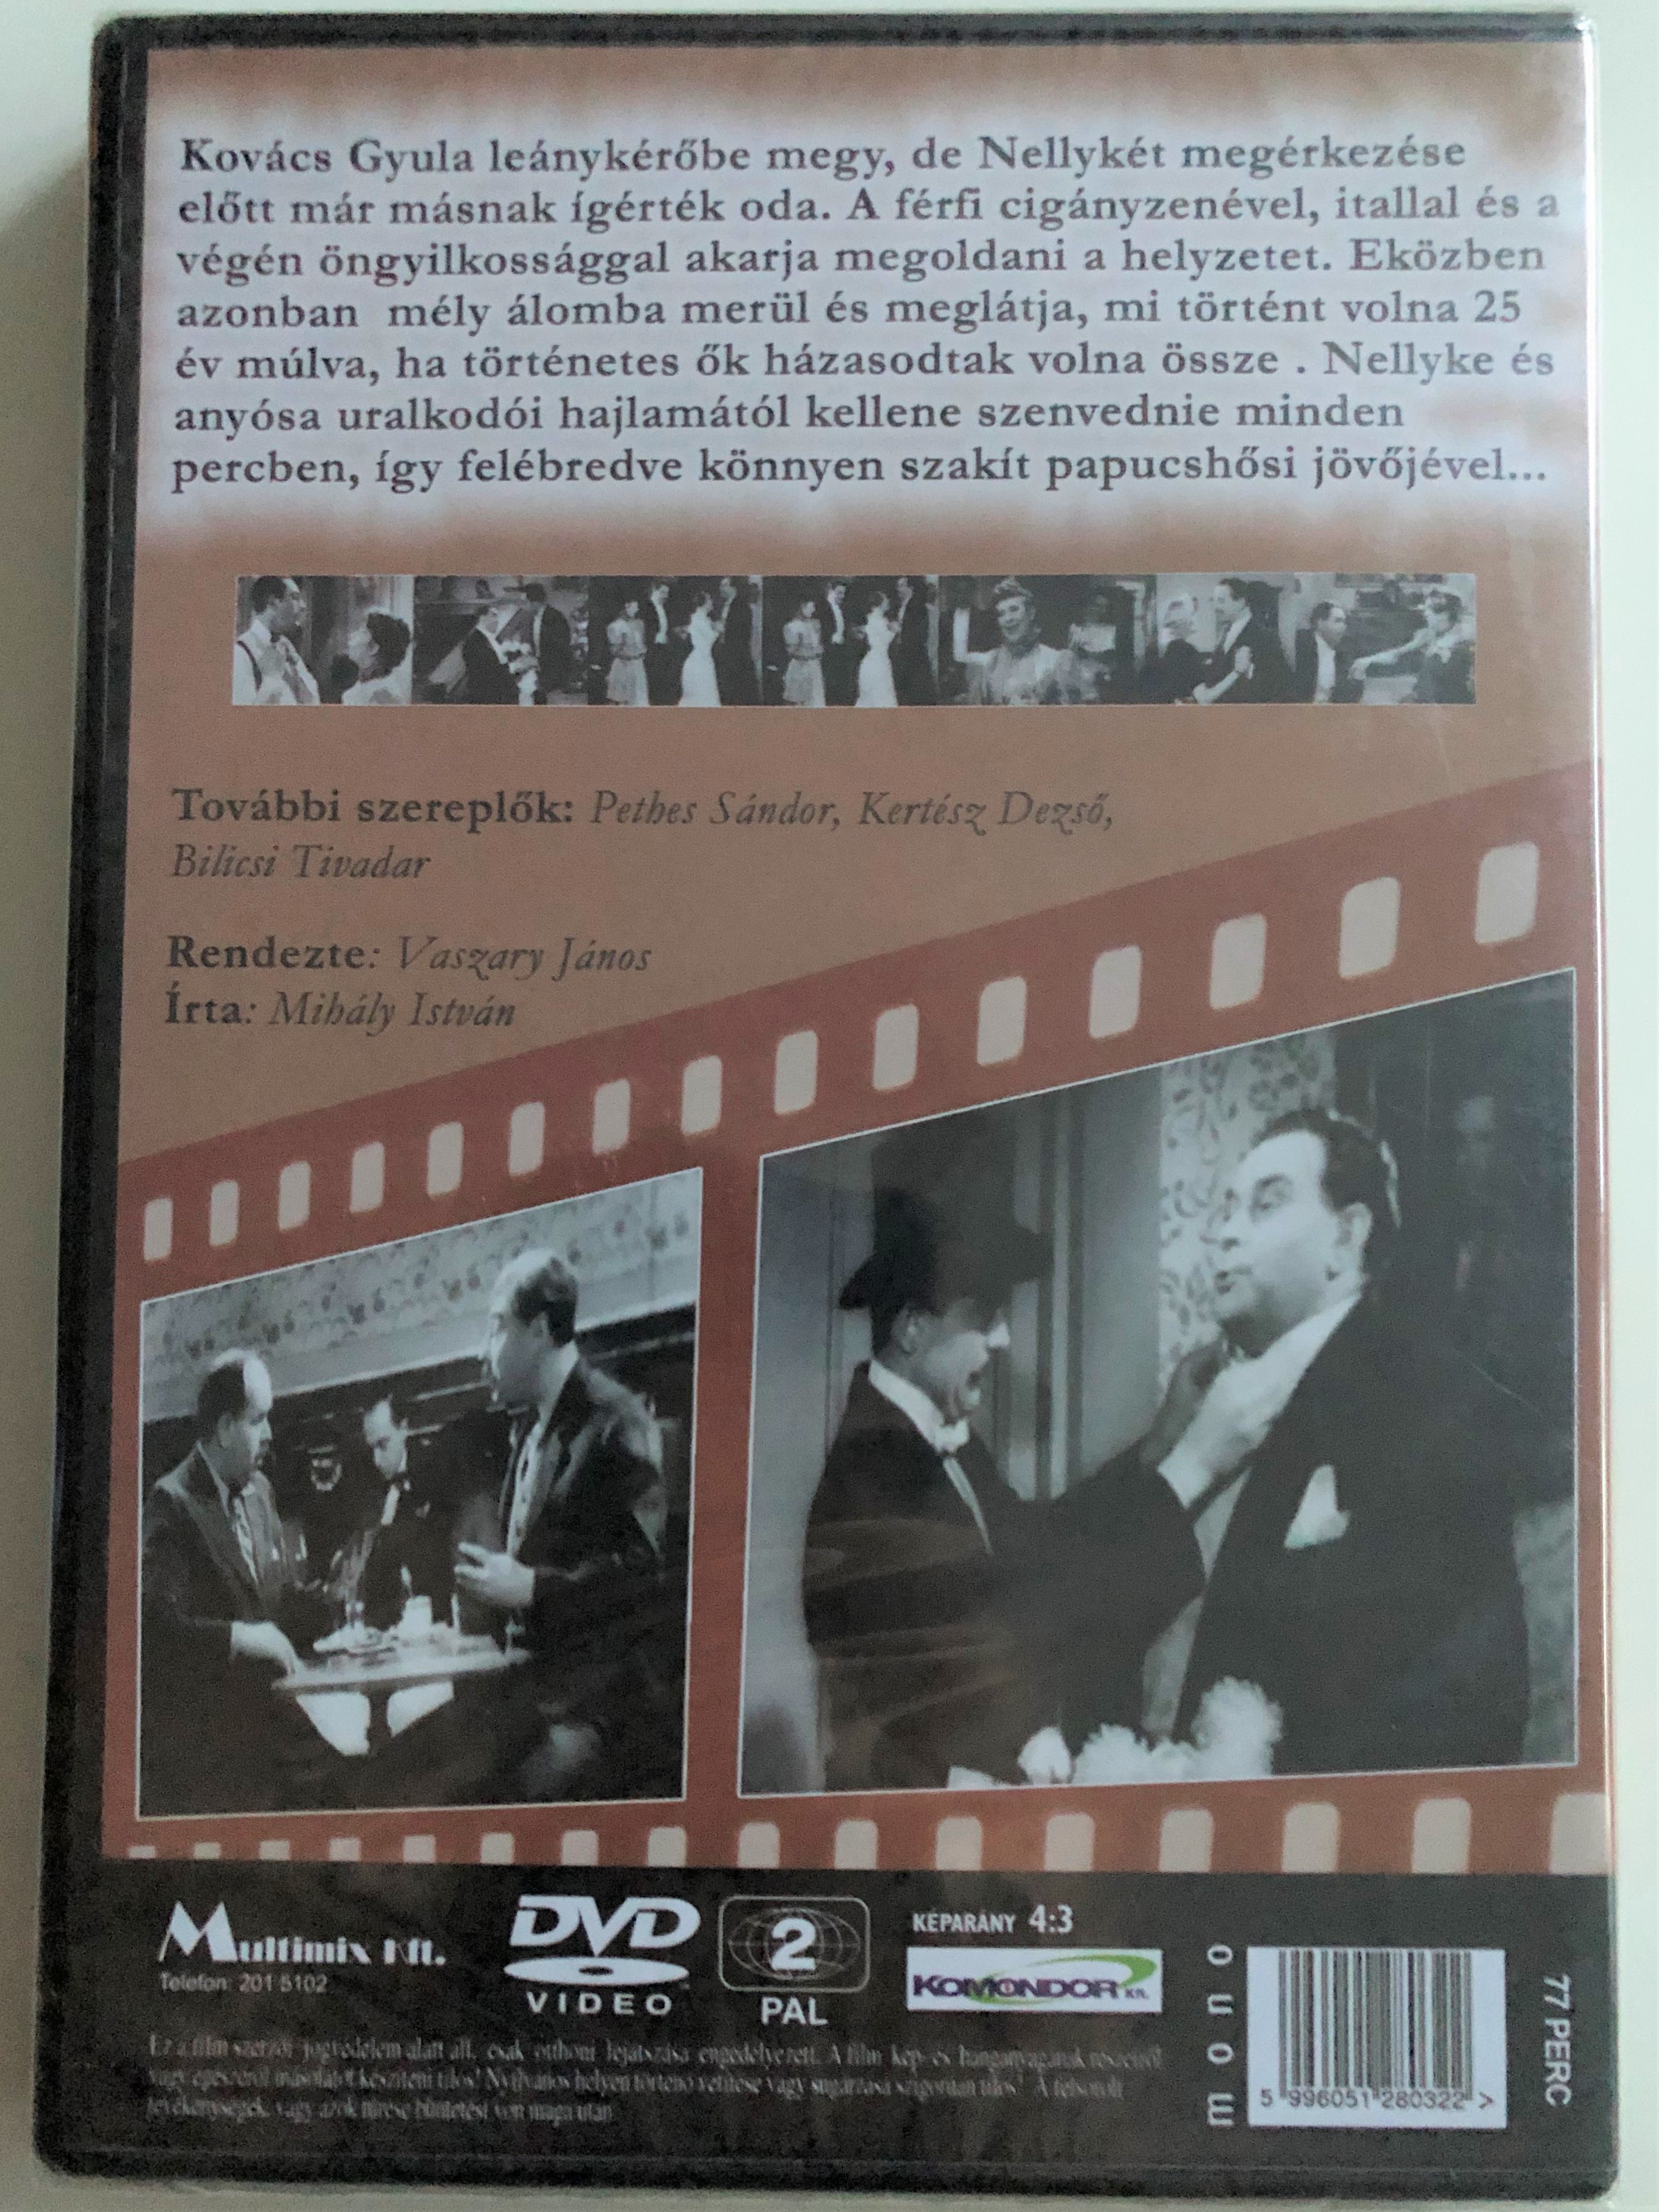 -a-papucsh-s-dvd-1938-directed-by-vaszary-j-nos-written-by-mih-ly-istv-n-starring-kabos-gyula-erd-lyi-mici-pethes-s-ndor-kert-sz-dezs-hungarian-b-w-classic-2-.jpg